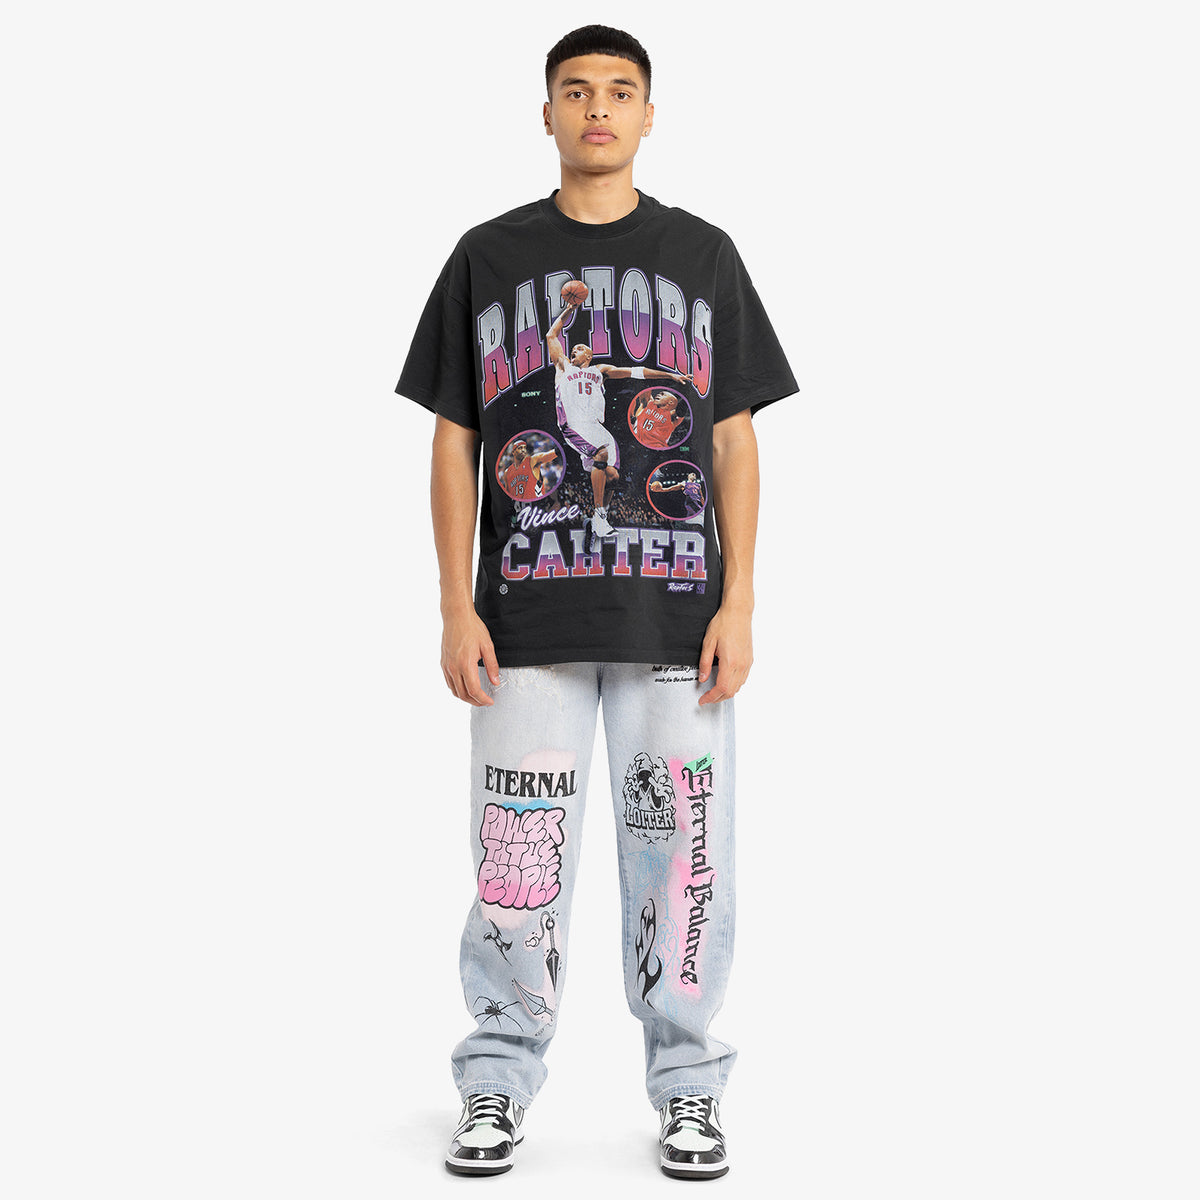 Vince Carter Toronto Raptors NBA Basketball Black T-Shirt S-5XL